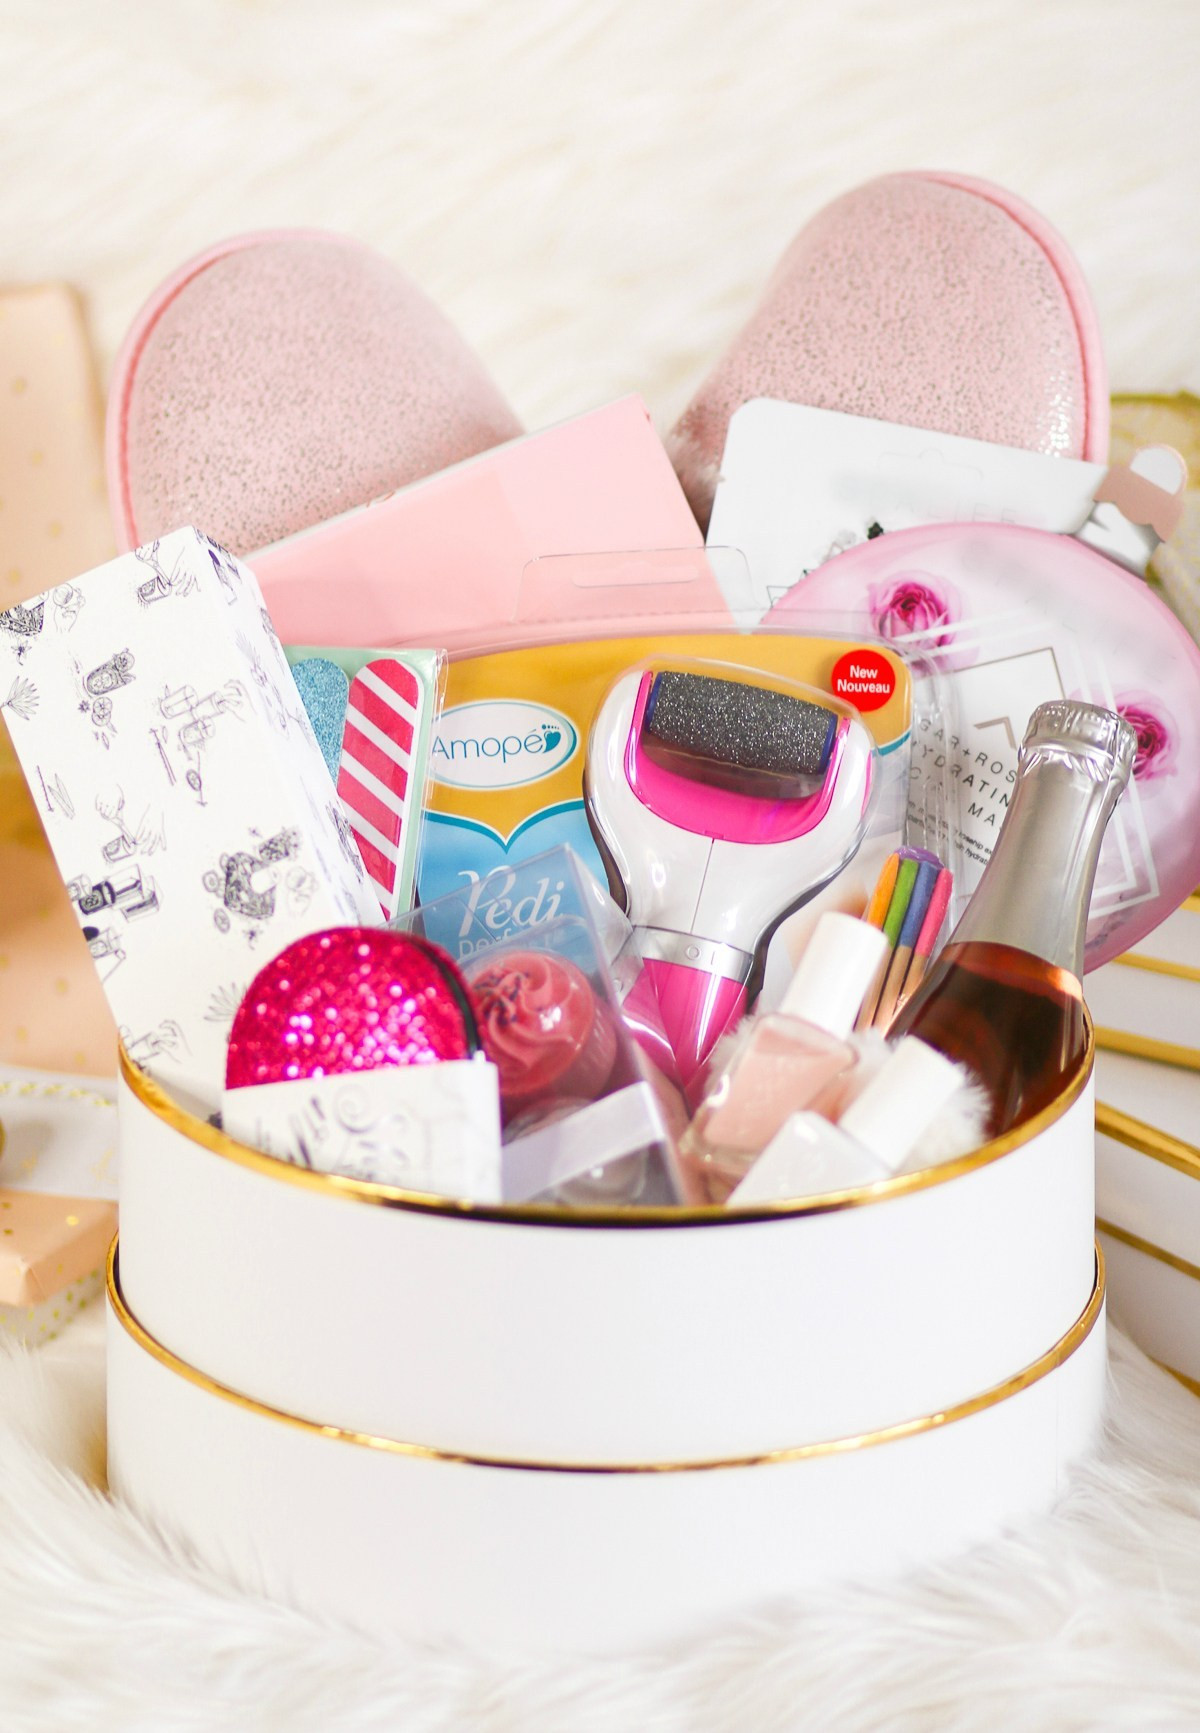 Diy Spa Gift Basket Ideas
 DIY Spa Gift Basket 12 Self Care Gift Ideas She’ll Love